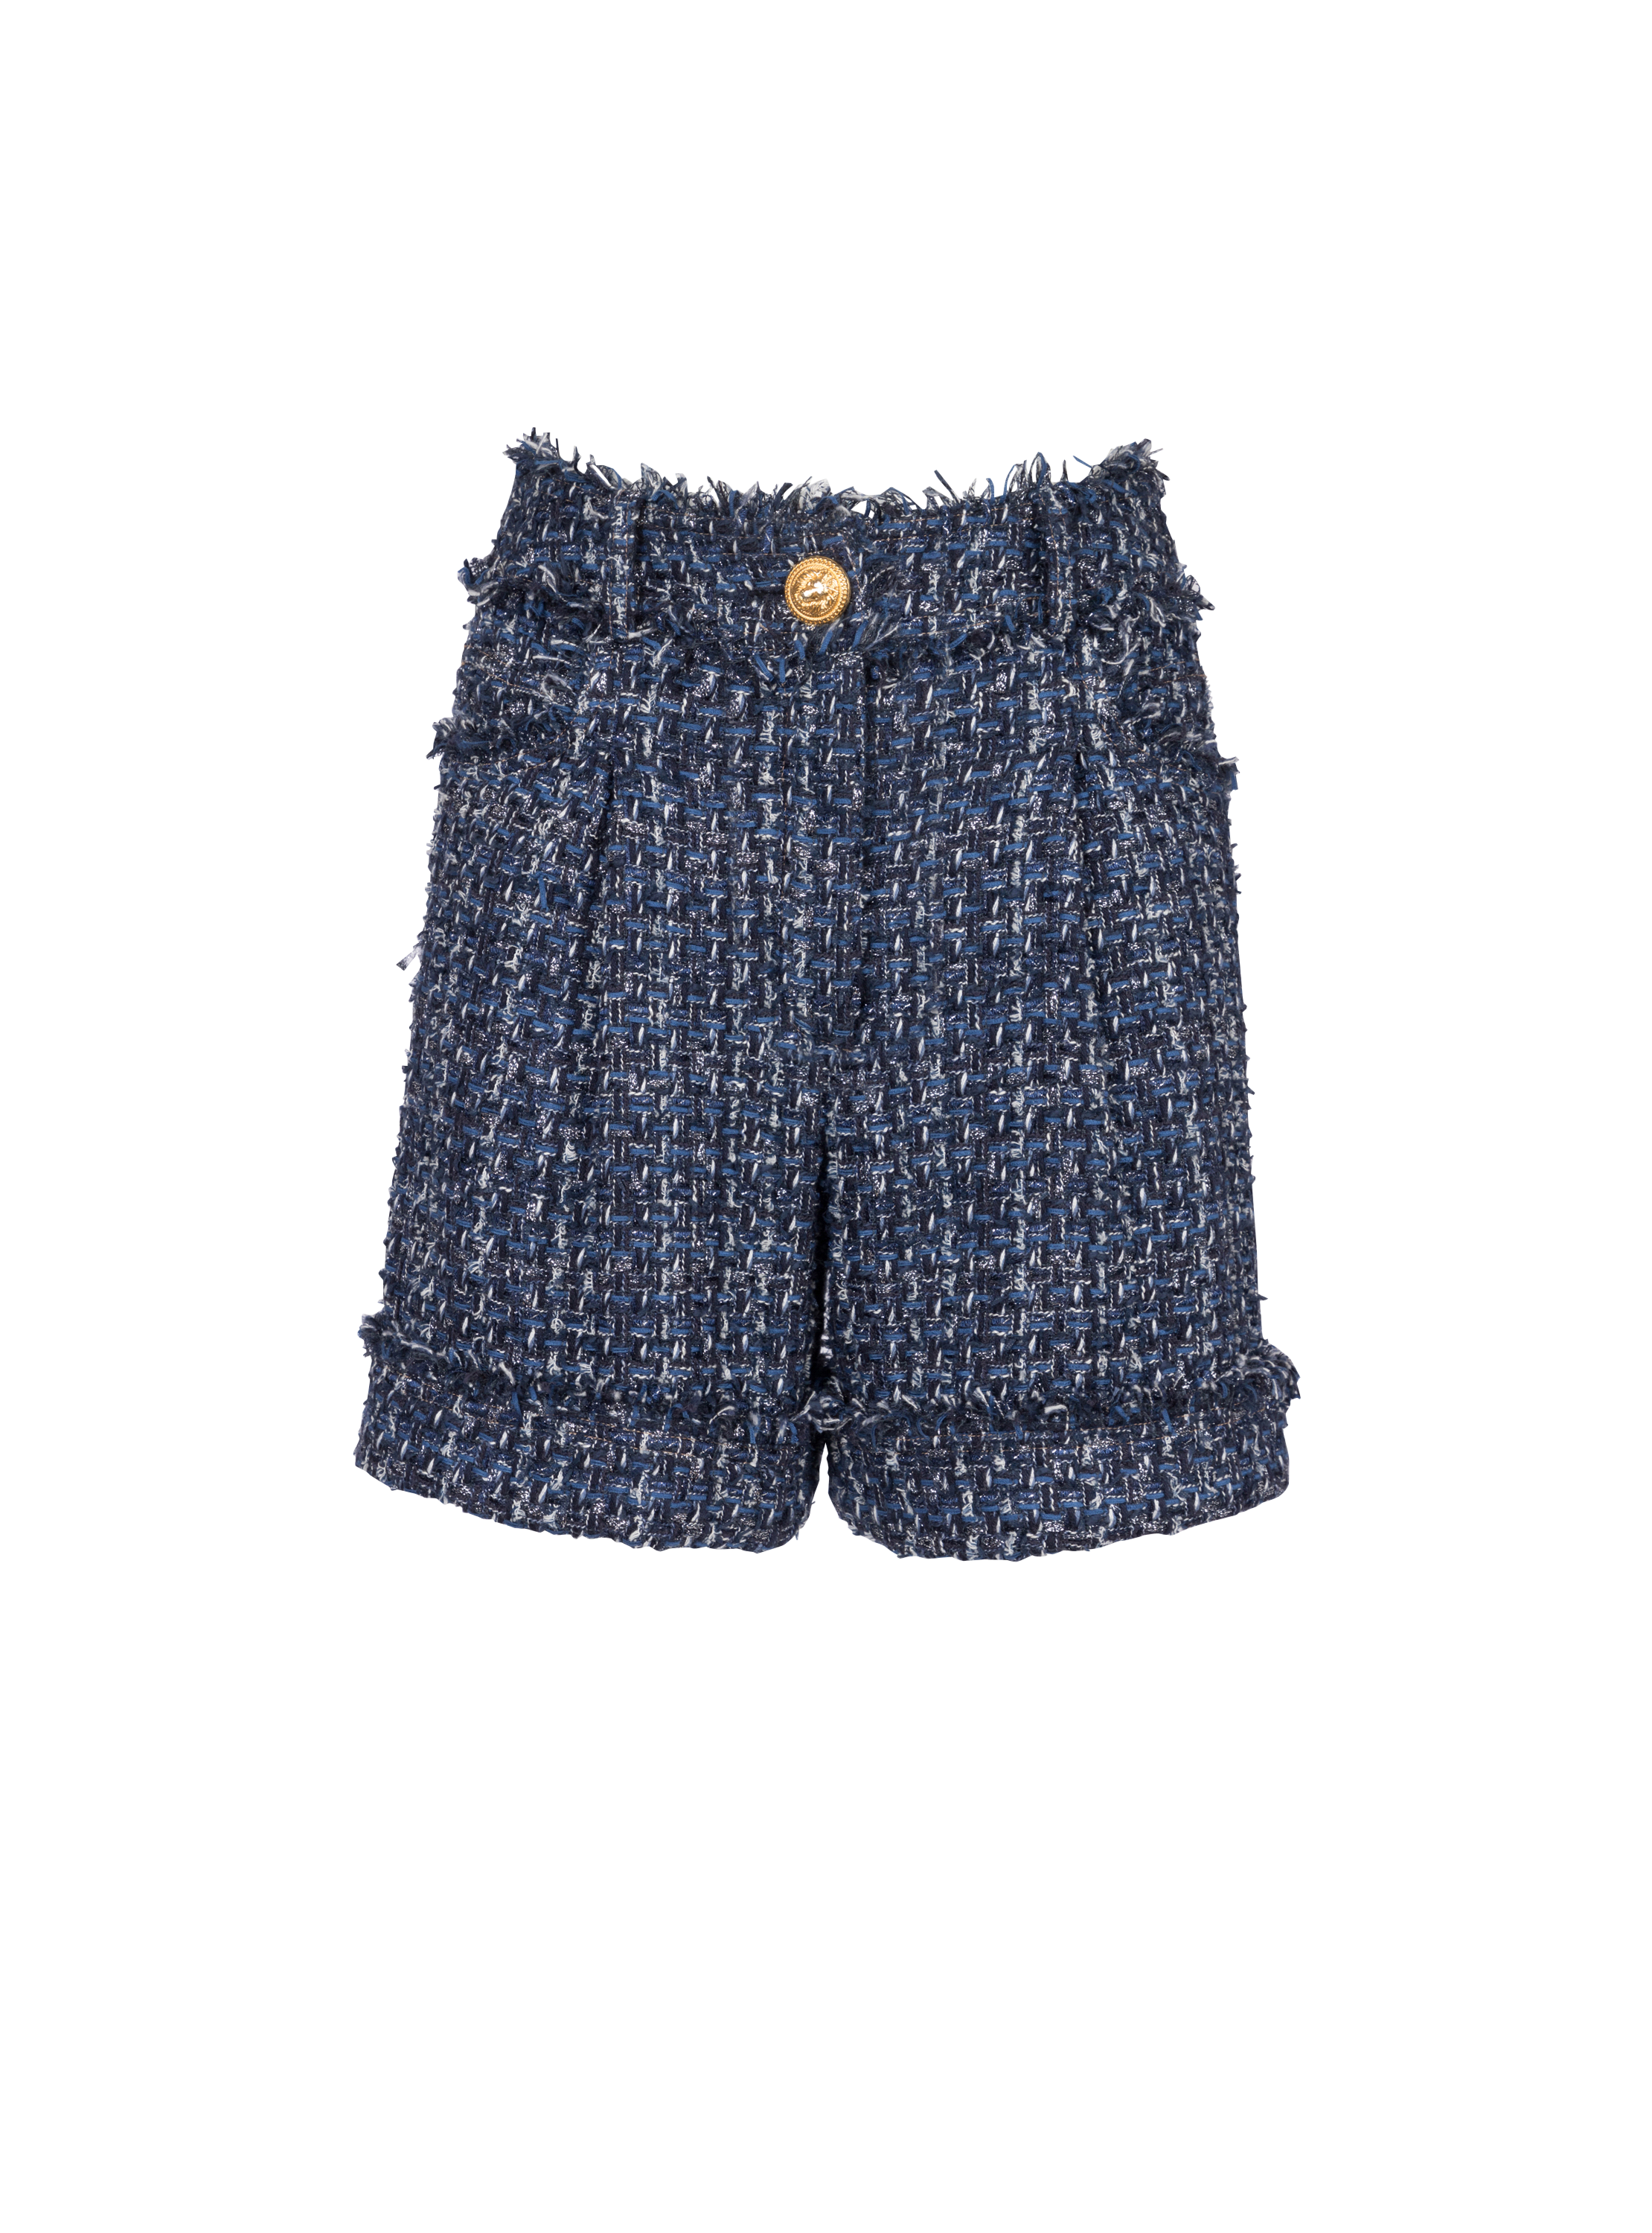 Shorts mit hoher Taille aus Tweed, marineblau, hi-res